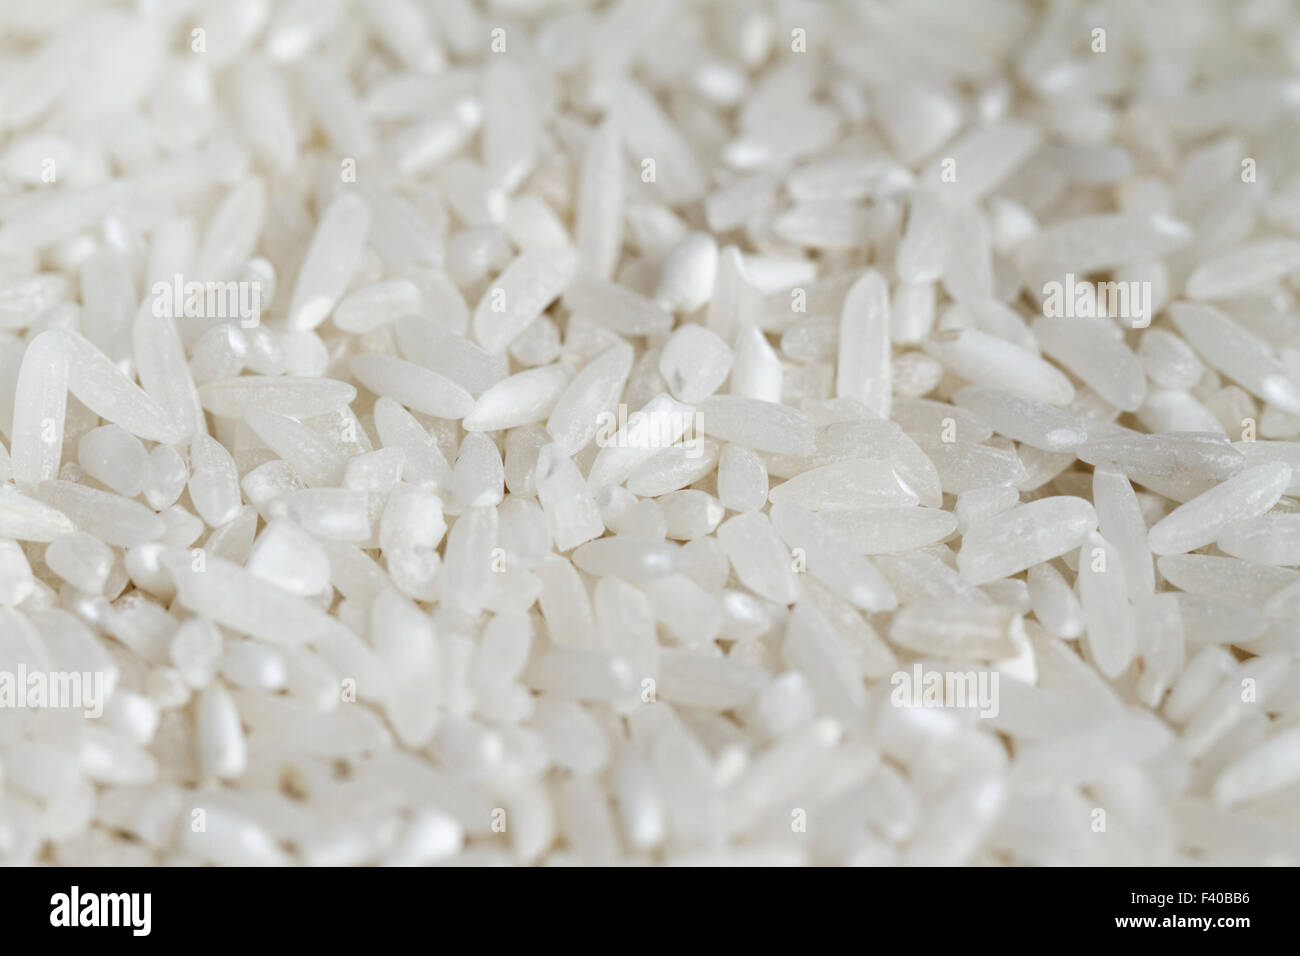 Close up phot lot of white rice Stock Photo